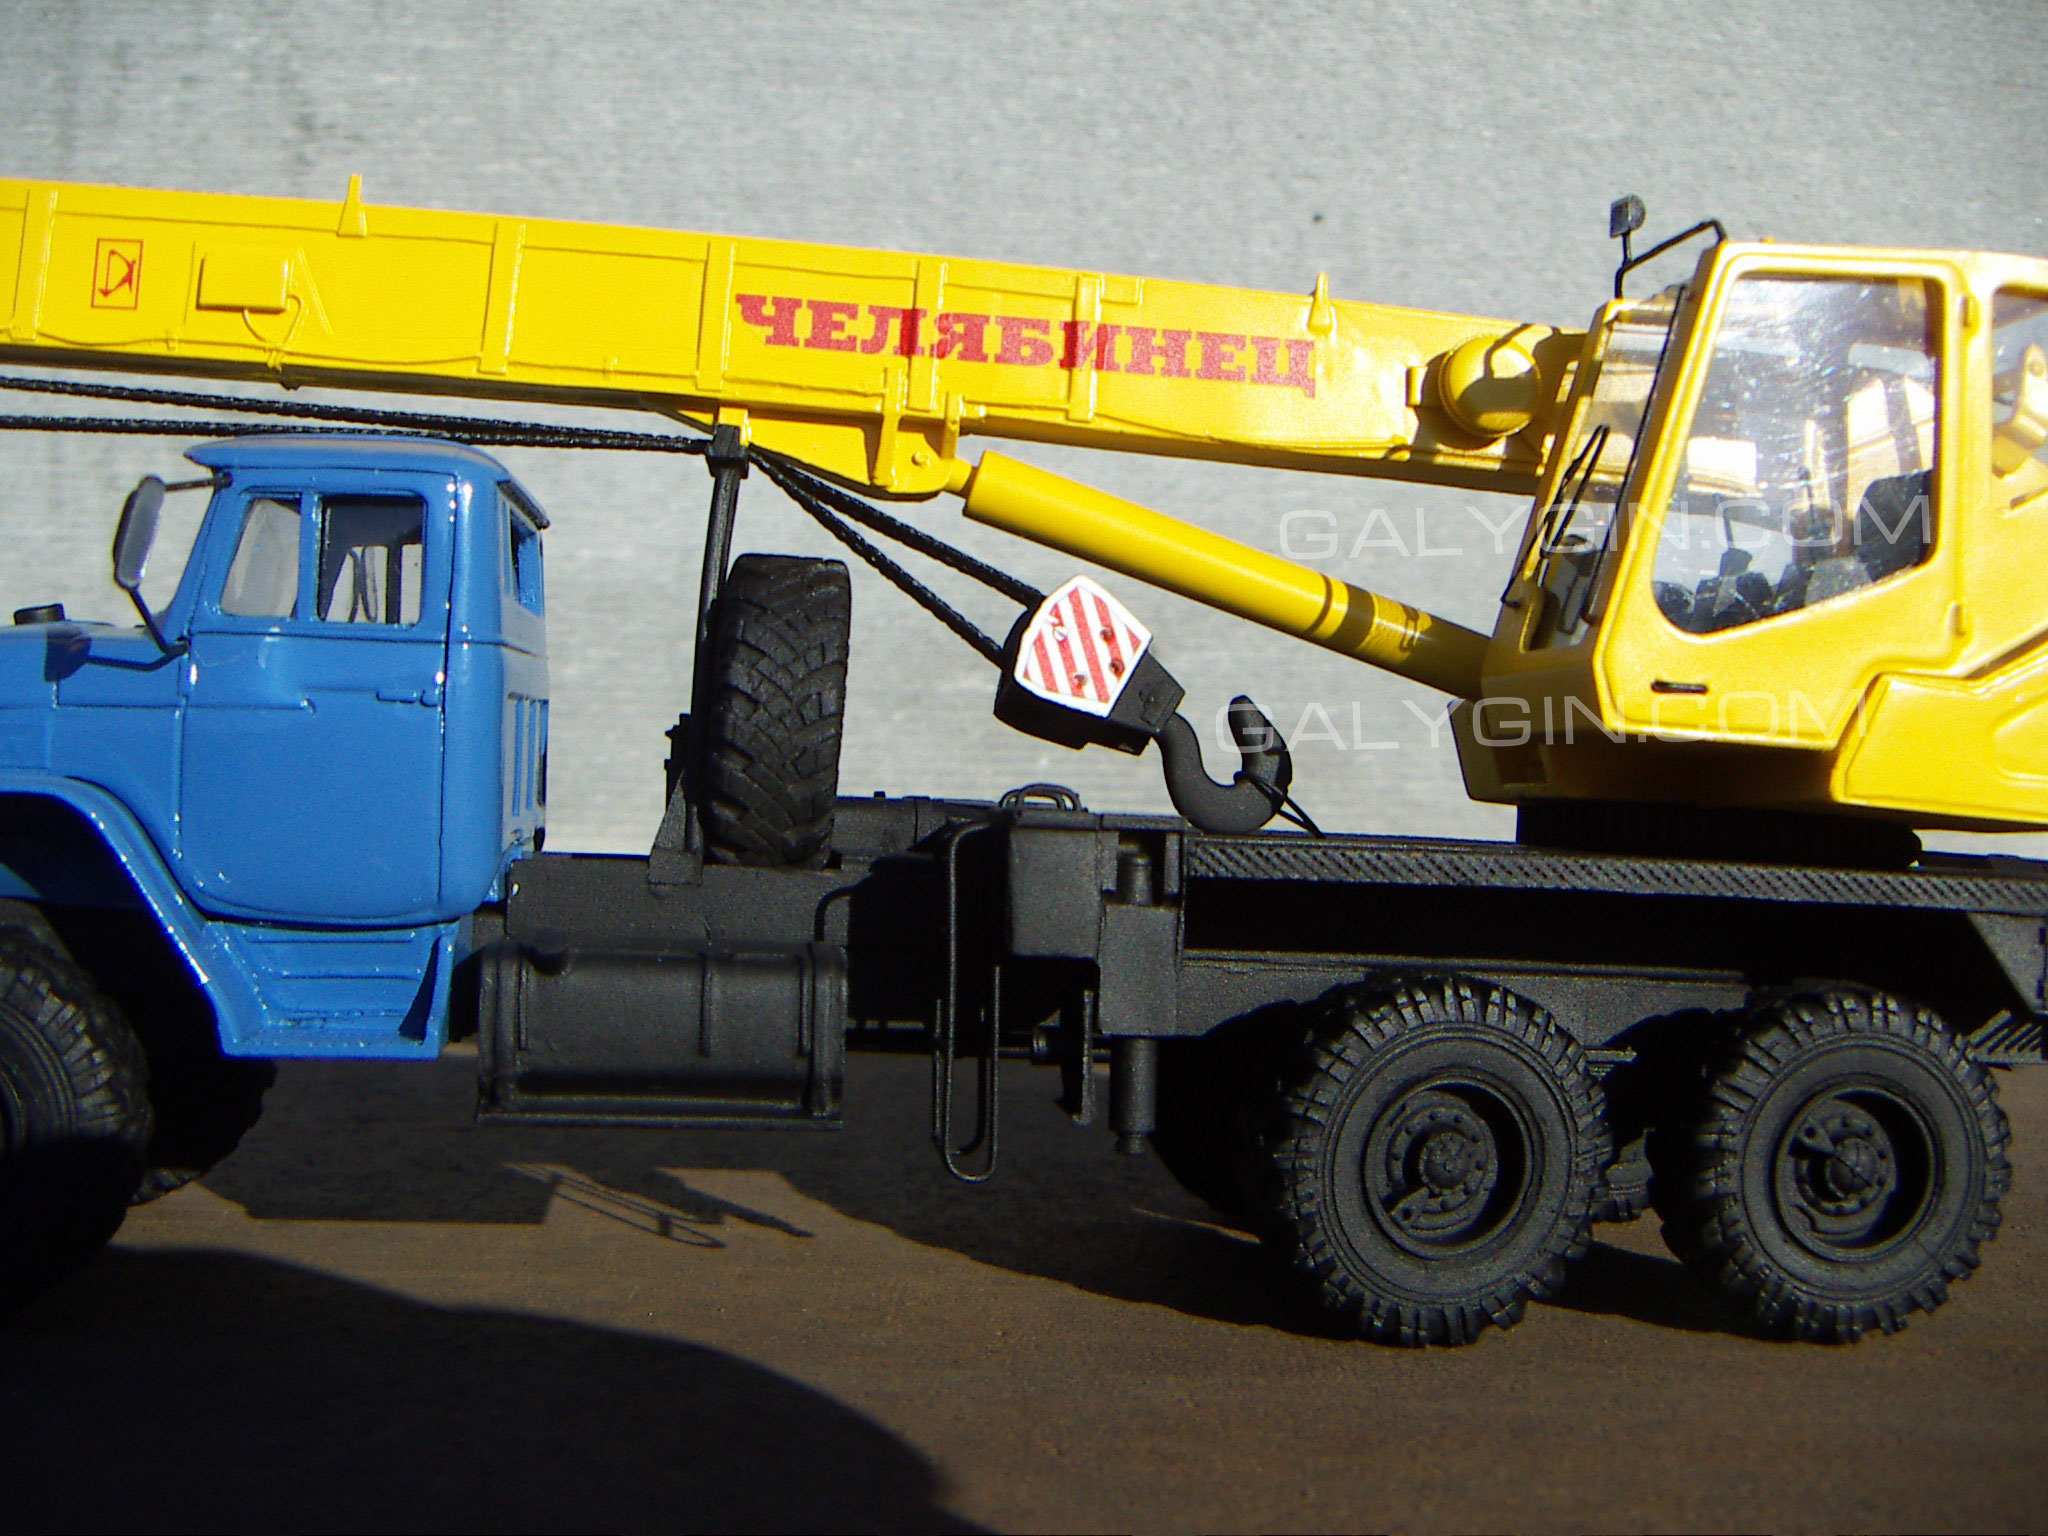 Автокран кс-45721 "челябинец" (25 тонн) на шасси урал, камаз, маз - автомобильный кран кс-45721